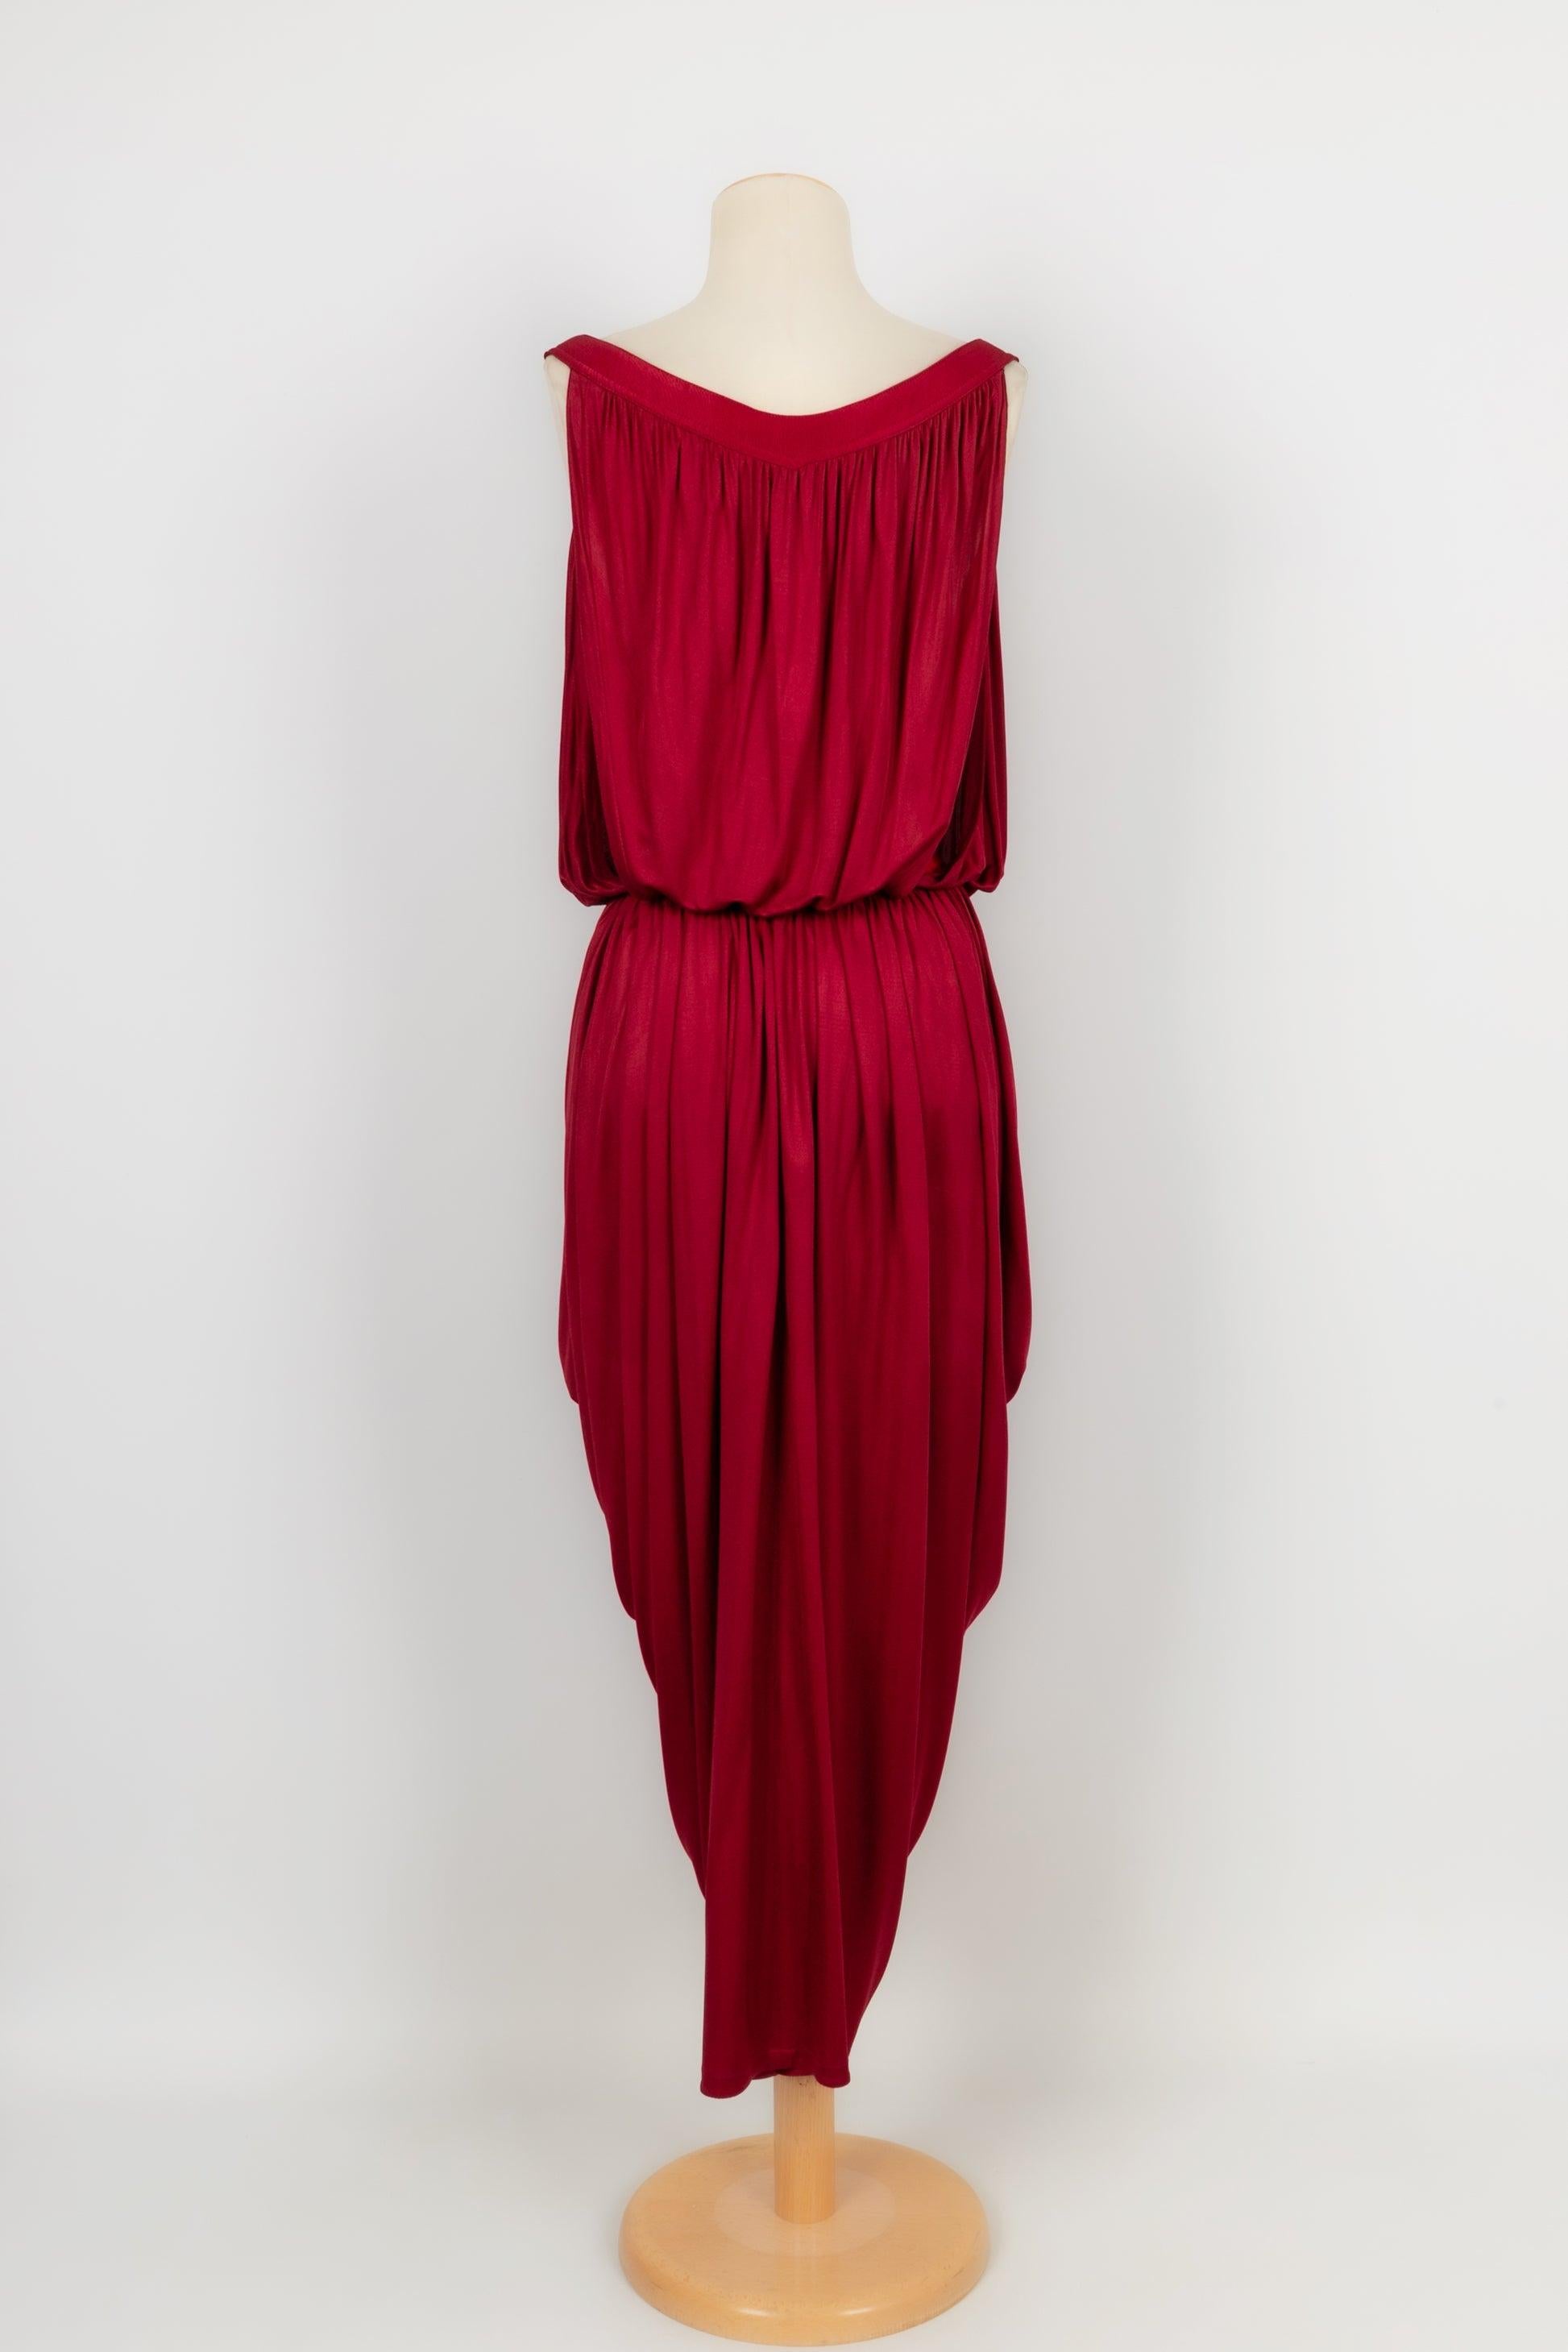 Gianni Versace Silk Pleated Dress, 1980s In Excellent Condition For Sale In SAINT-OUEN-SUR-SEINE, FR